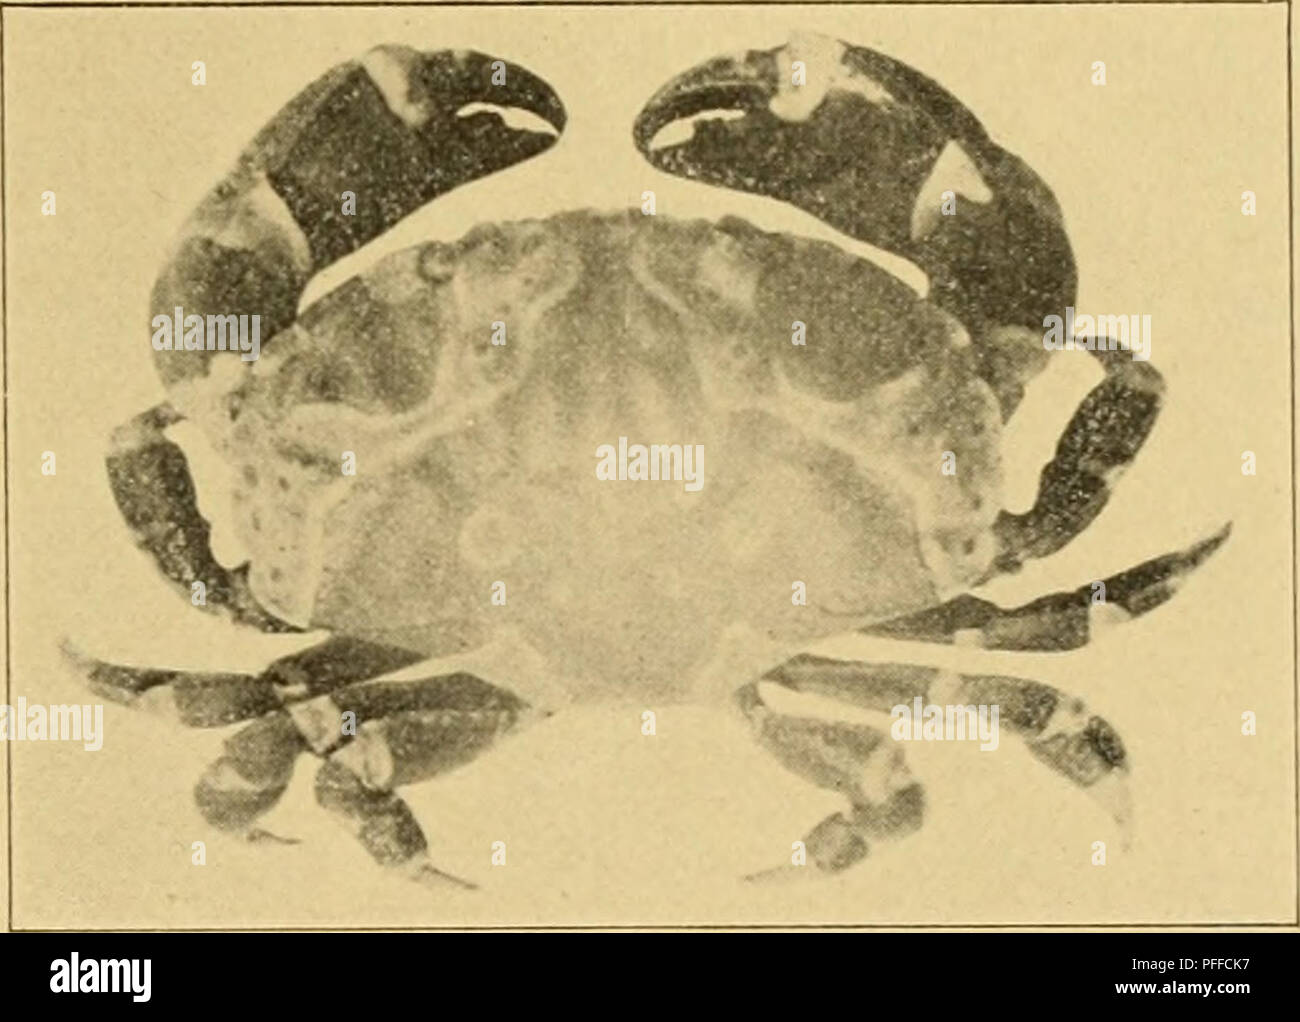 . Decapod Crustacea of Bermuda. Their distribution, variations, and habits. Decapoda (Crustacea). INDEX. 473 Sesarma augustipes, 327. cinerea, 327, 330. Miersi, 331. Ricordi, 323, 327, 330. Ricorcli, terrestris, 328, 453, 457. Robertii, 330. Stimpsonii, 327. 331. Spider crab, 397-399, 400-415. crab, common, 400. crab, red, 400, 404. Spinosella sororia, 430. Sprite, 306. Stegias Clibanarii, 448. Stenocionops furcata, 415, 416. Stenorhynchus Sagittarius, 397, 454. Stomatopoda, distribution of, 453. Strombns gigas, 446. Swimming crabs, 364. .Tedania ignis, 336. Triton variegatns, 446, 447. Troglo Stock Photo